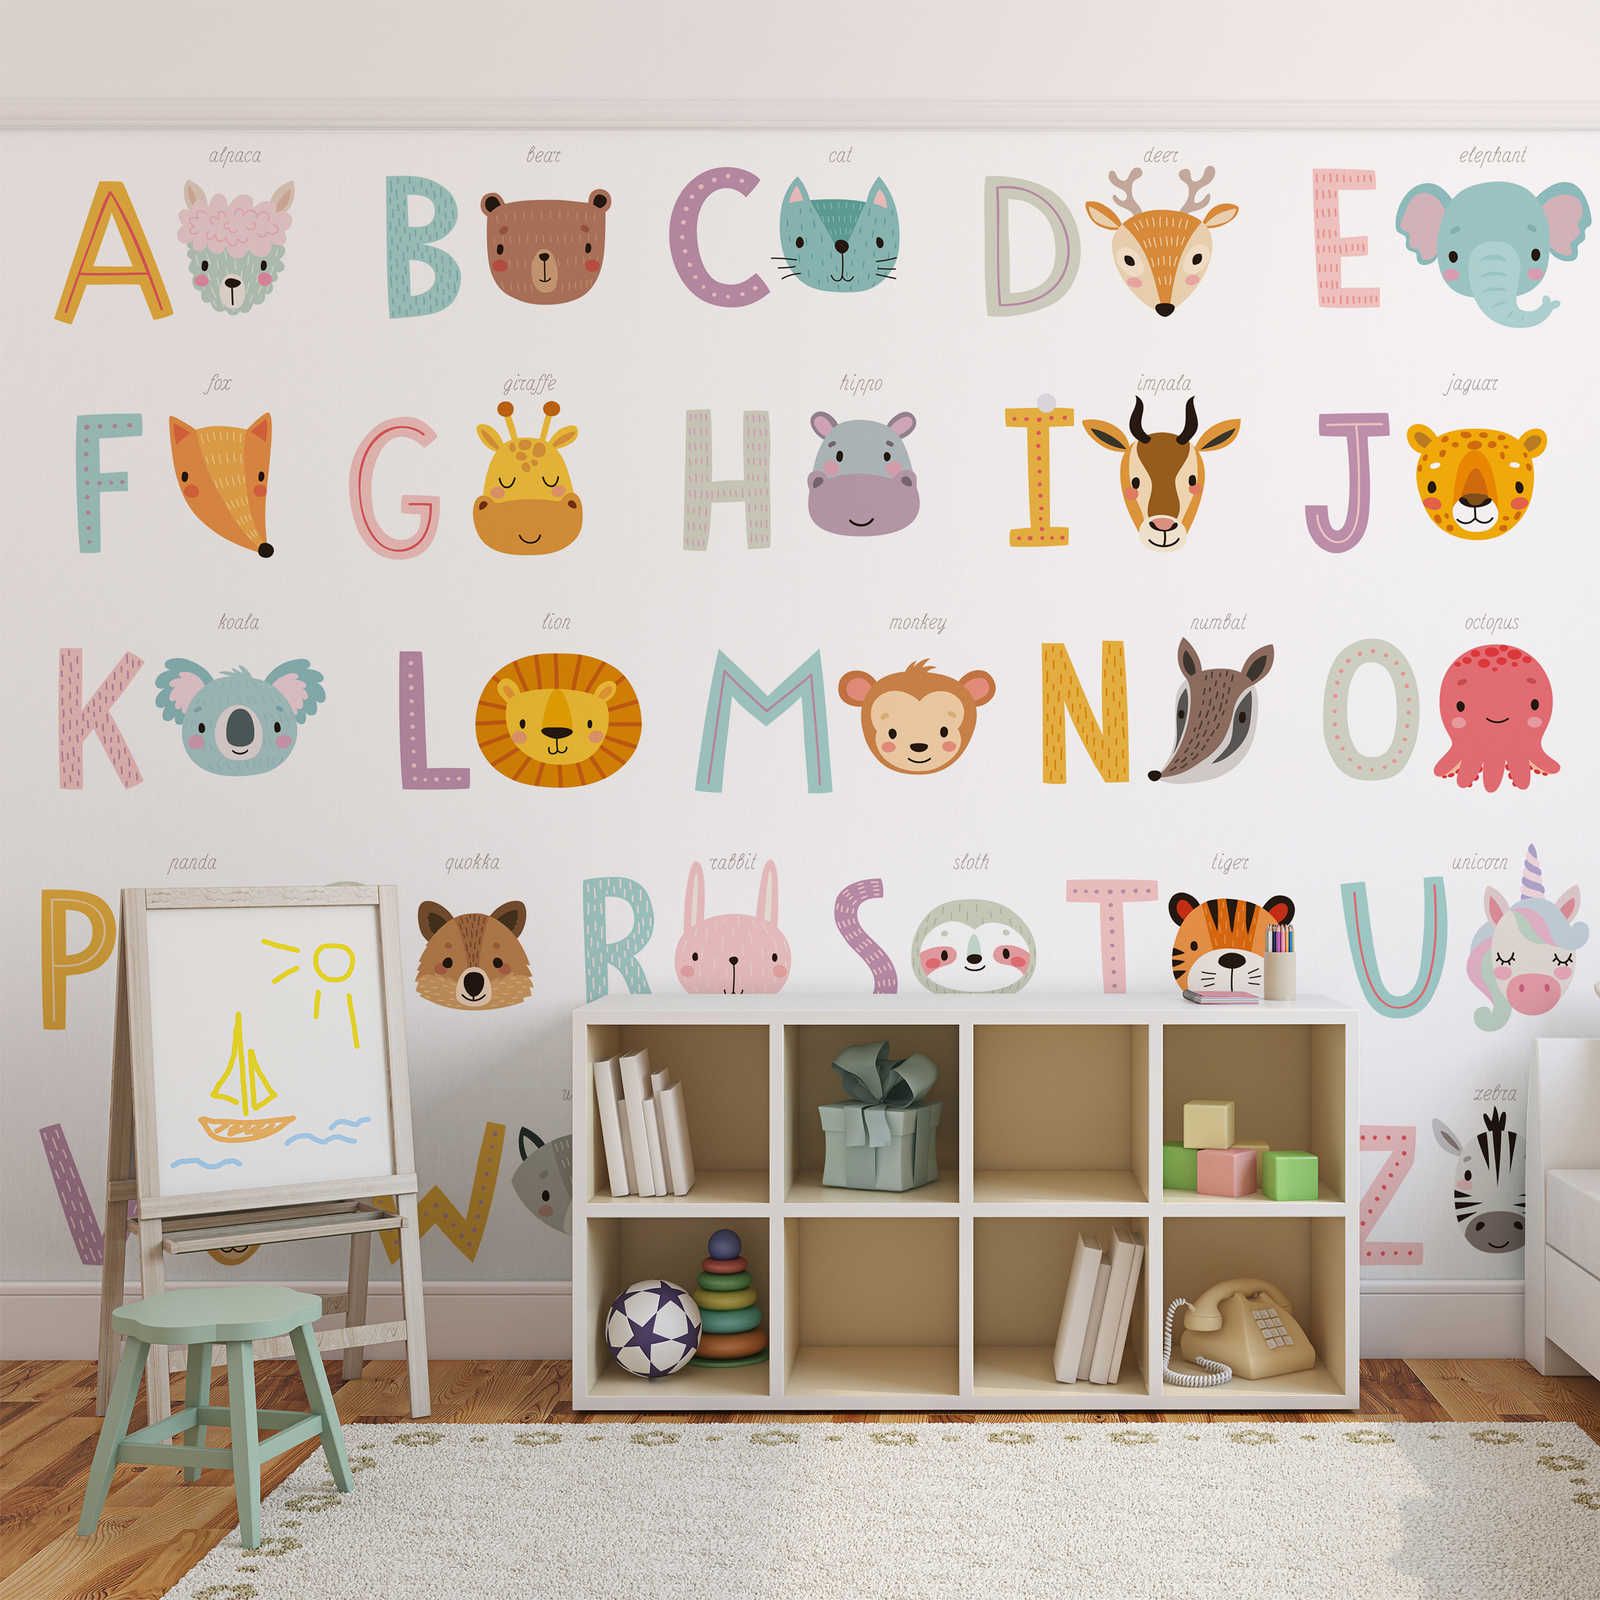 Photo wallpaper ABC with animals and animal names - Smooth & matt non-woven
